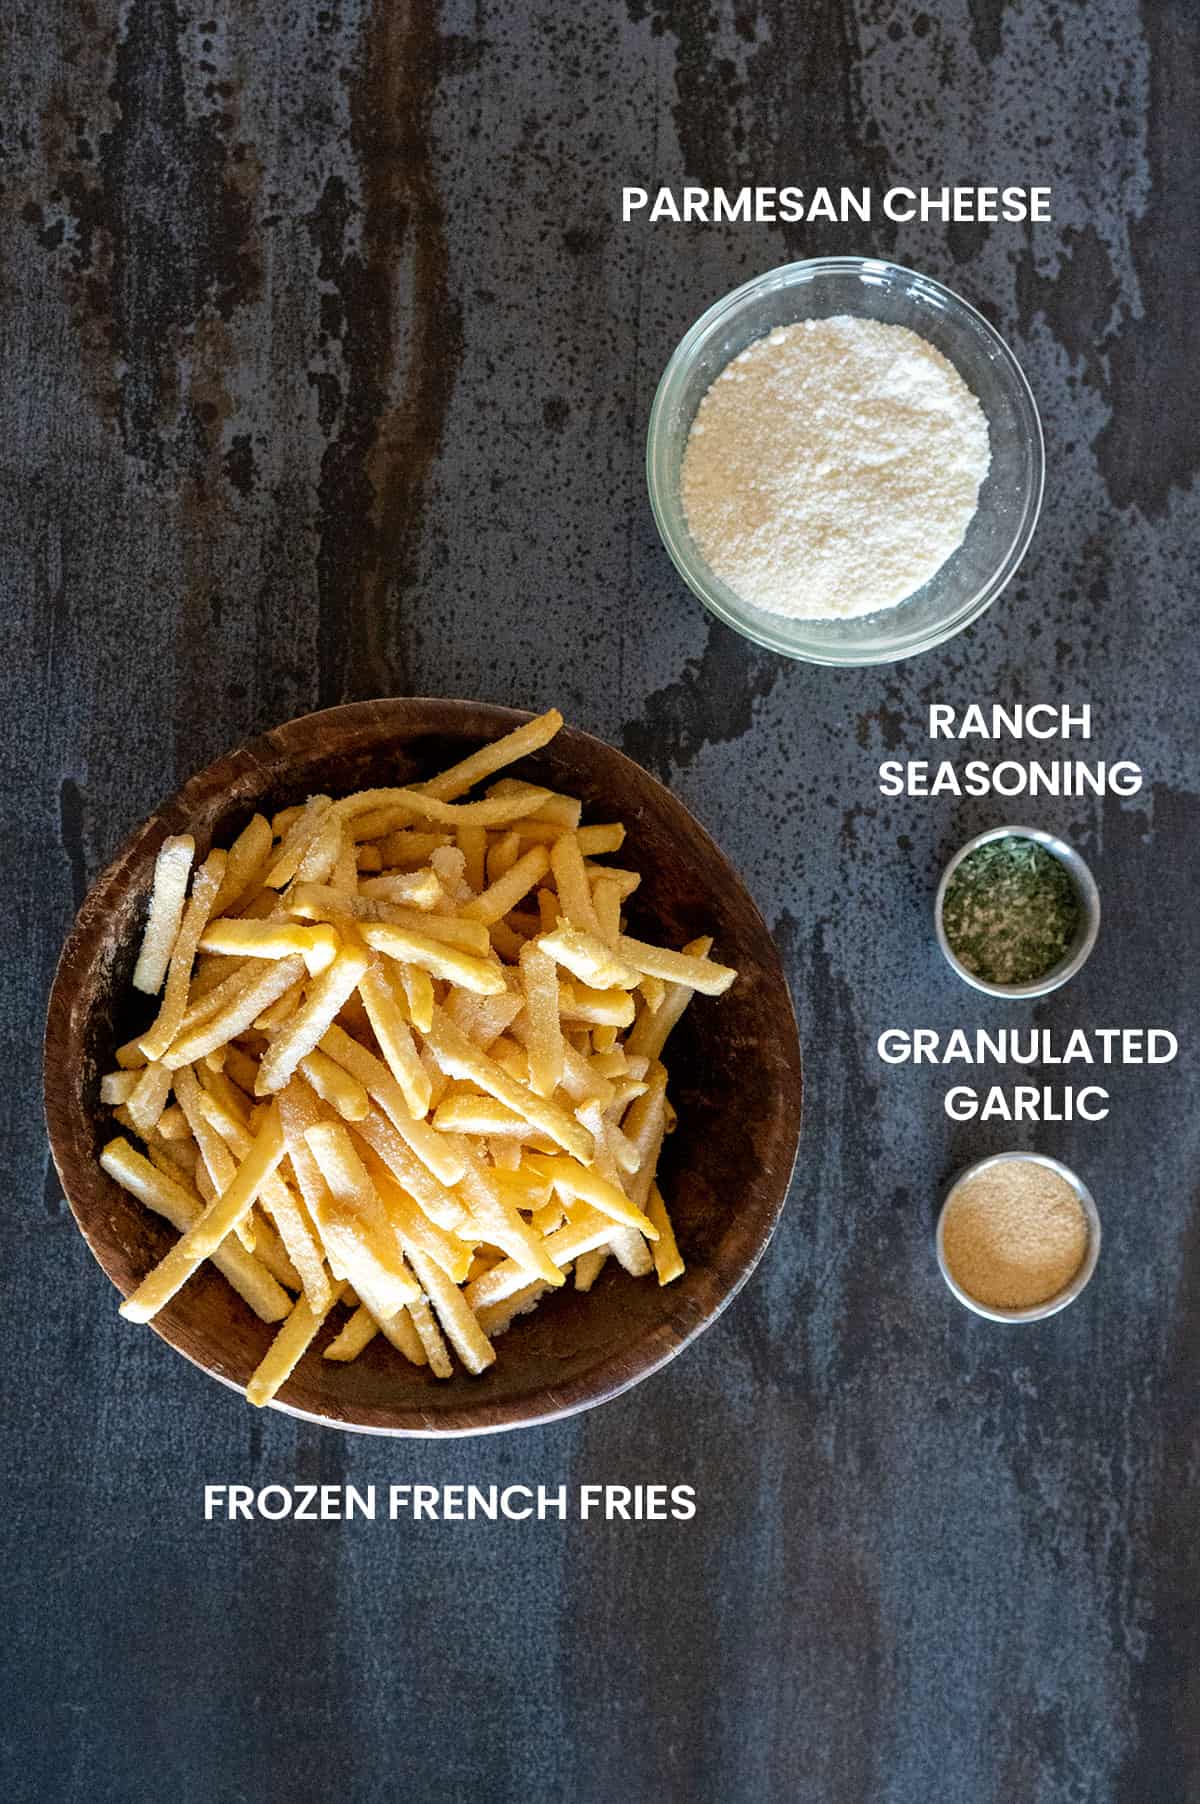 Garlic Parmesan Ranch Fries Ingredients: frozen fries, parmesan cheese, ranch seasoning, granulated garlic.